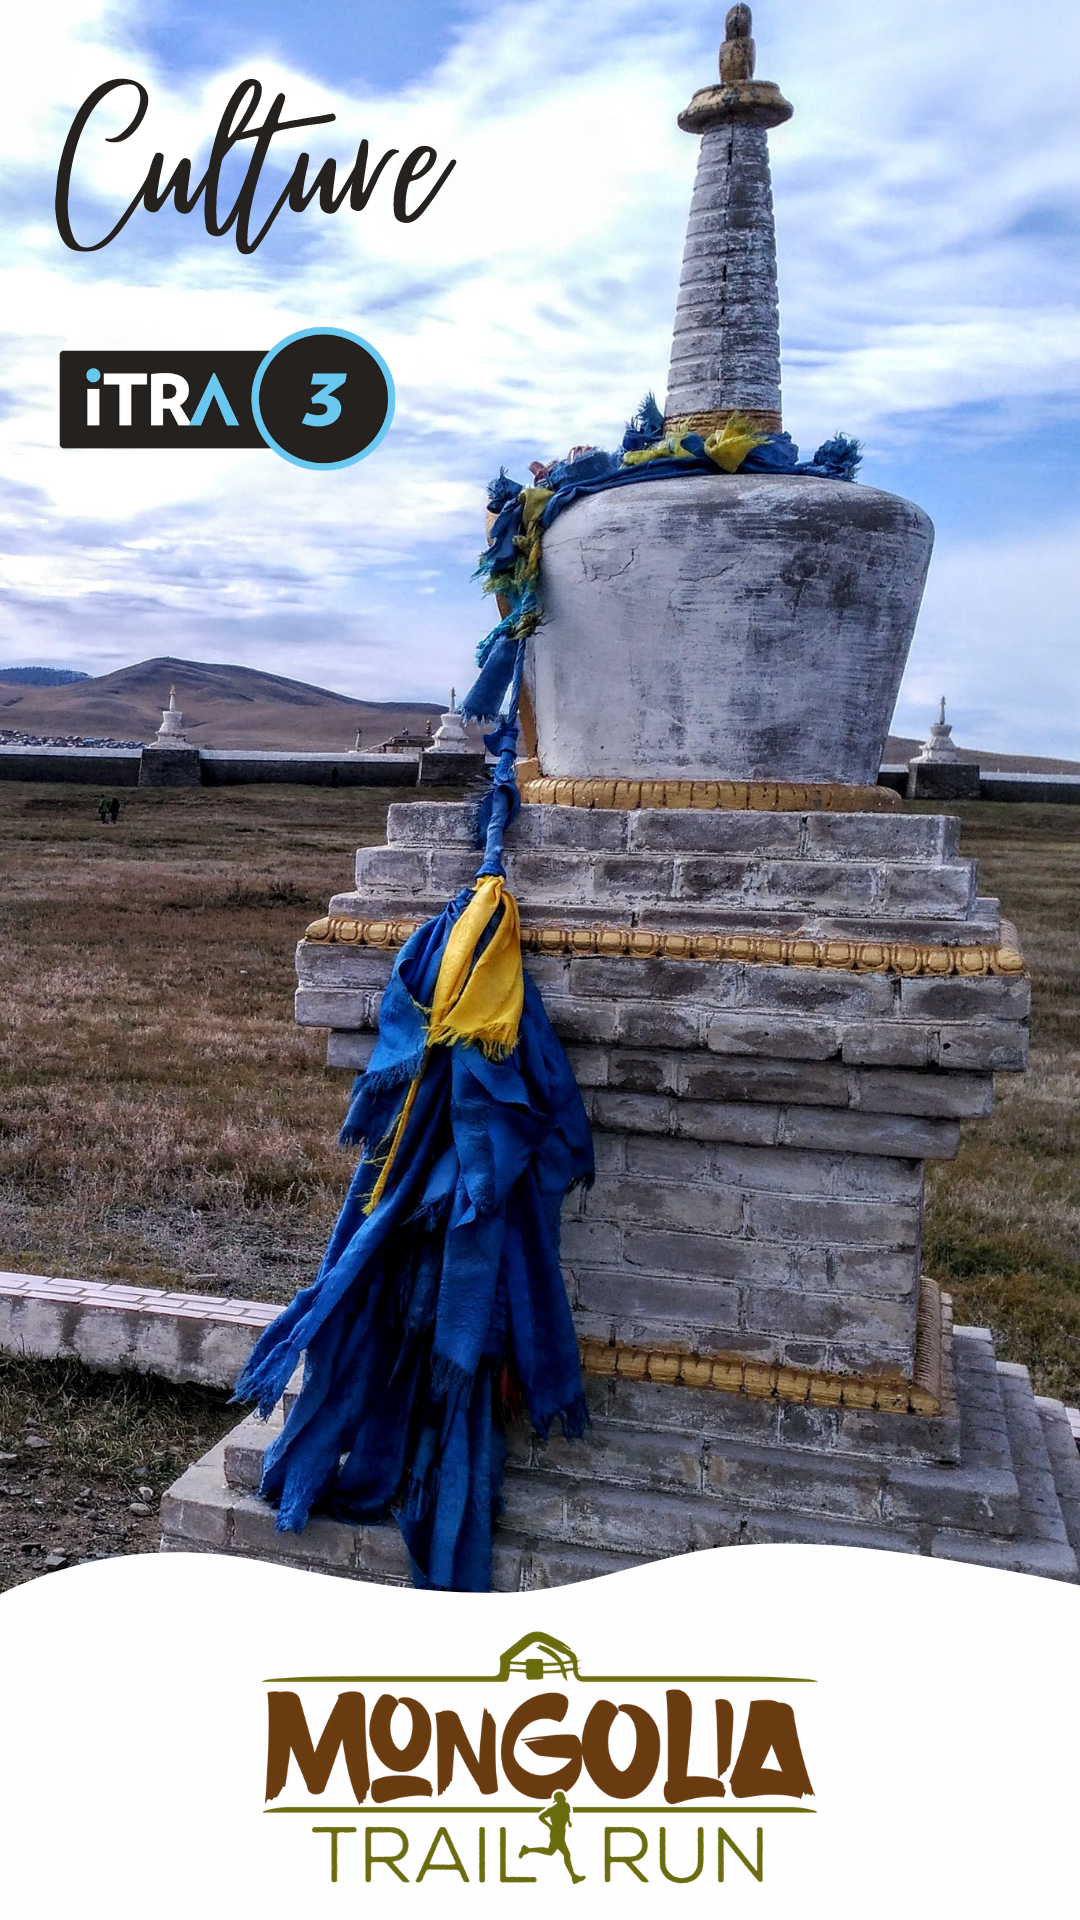 mongolia trail run cultura